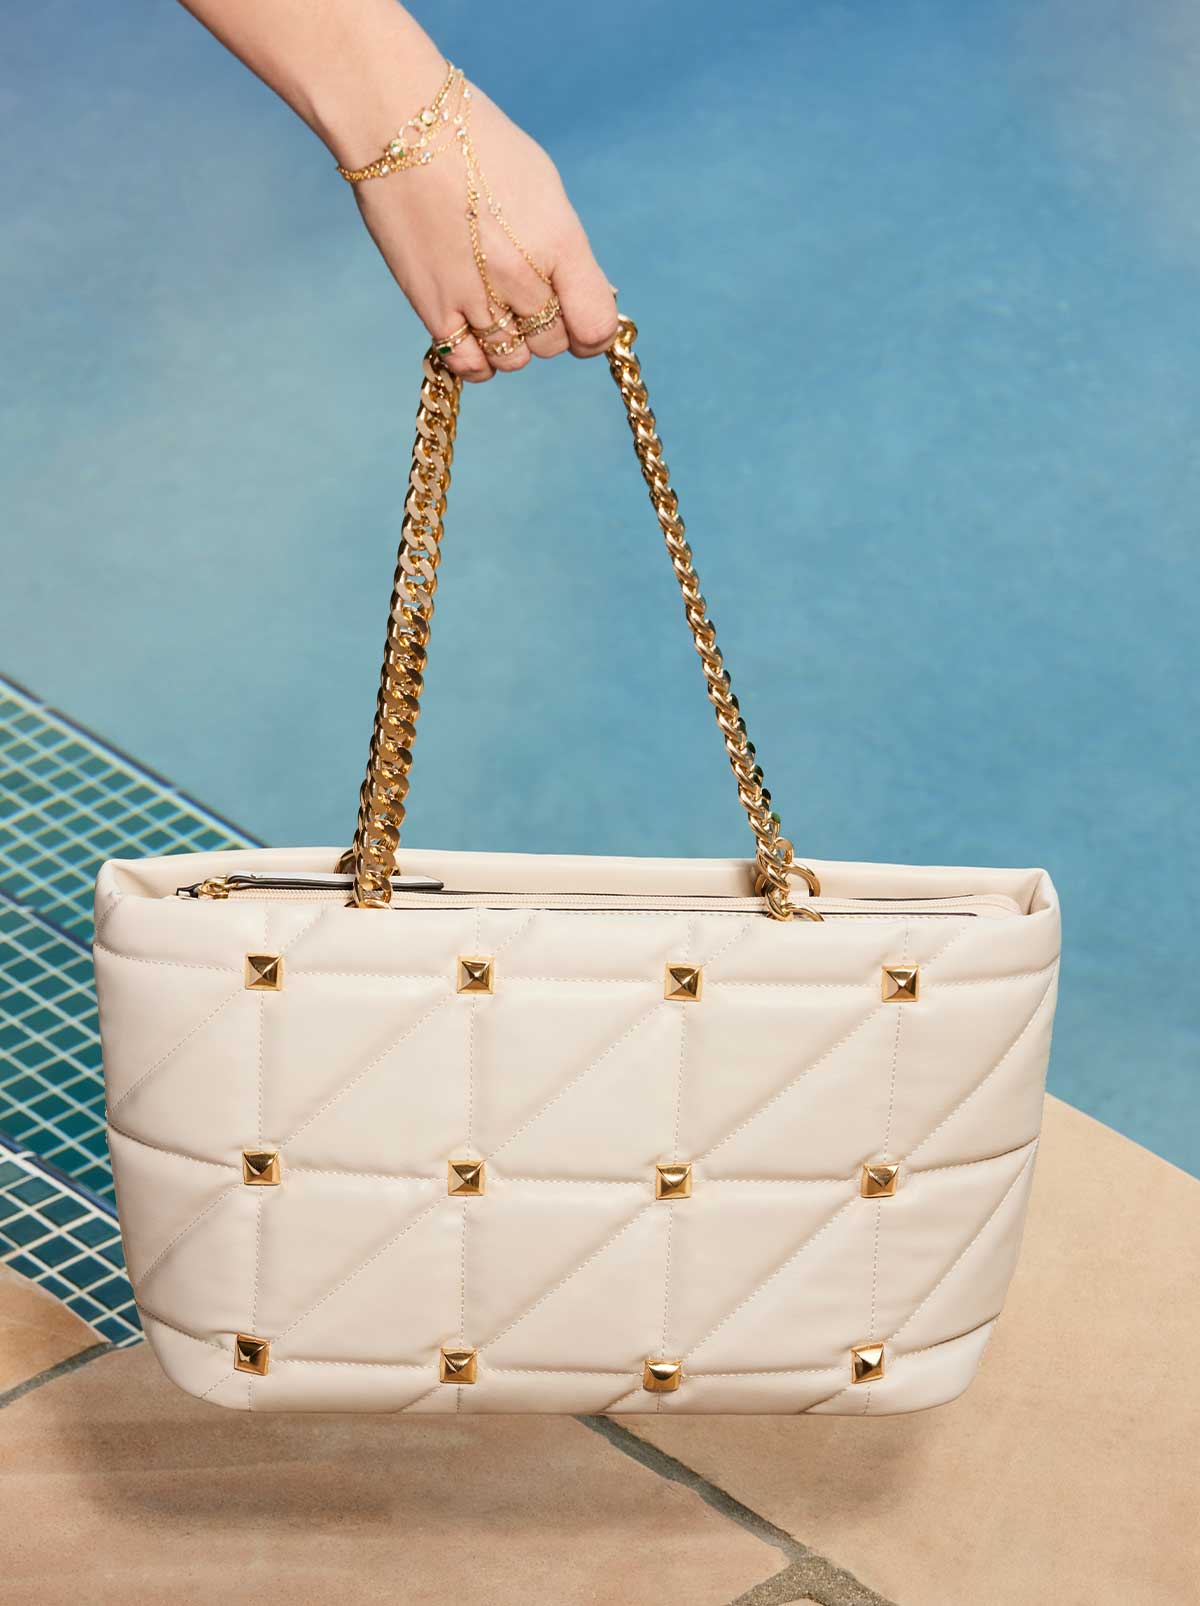 jessica simpson handbags | Nordstrom